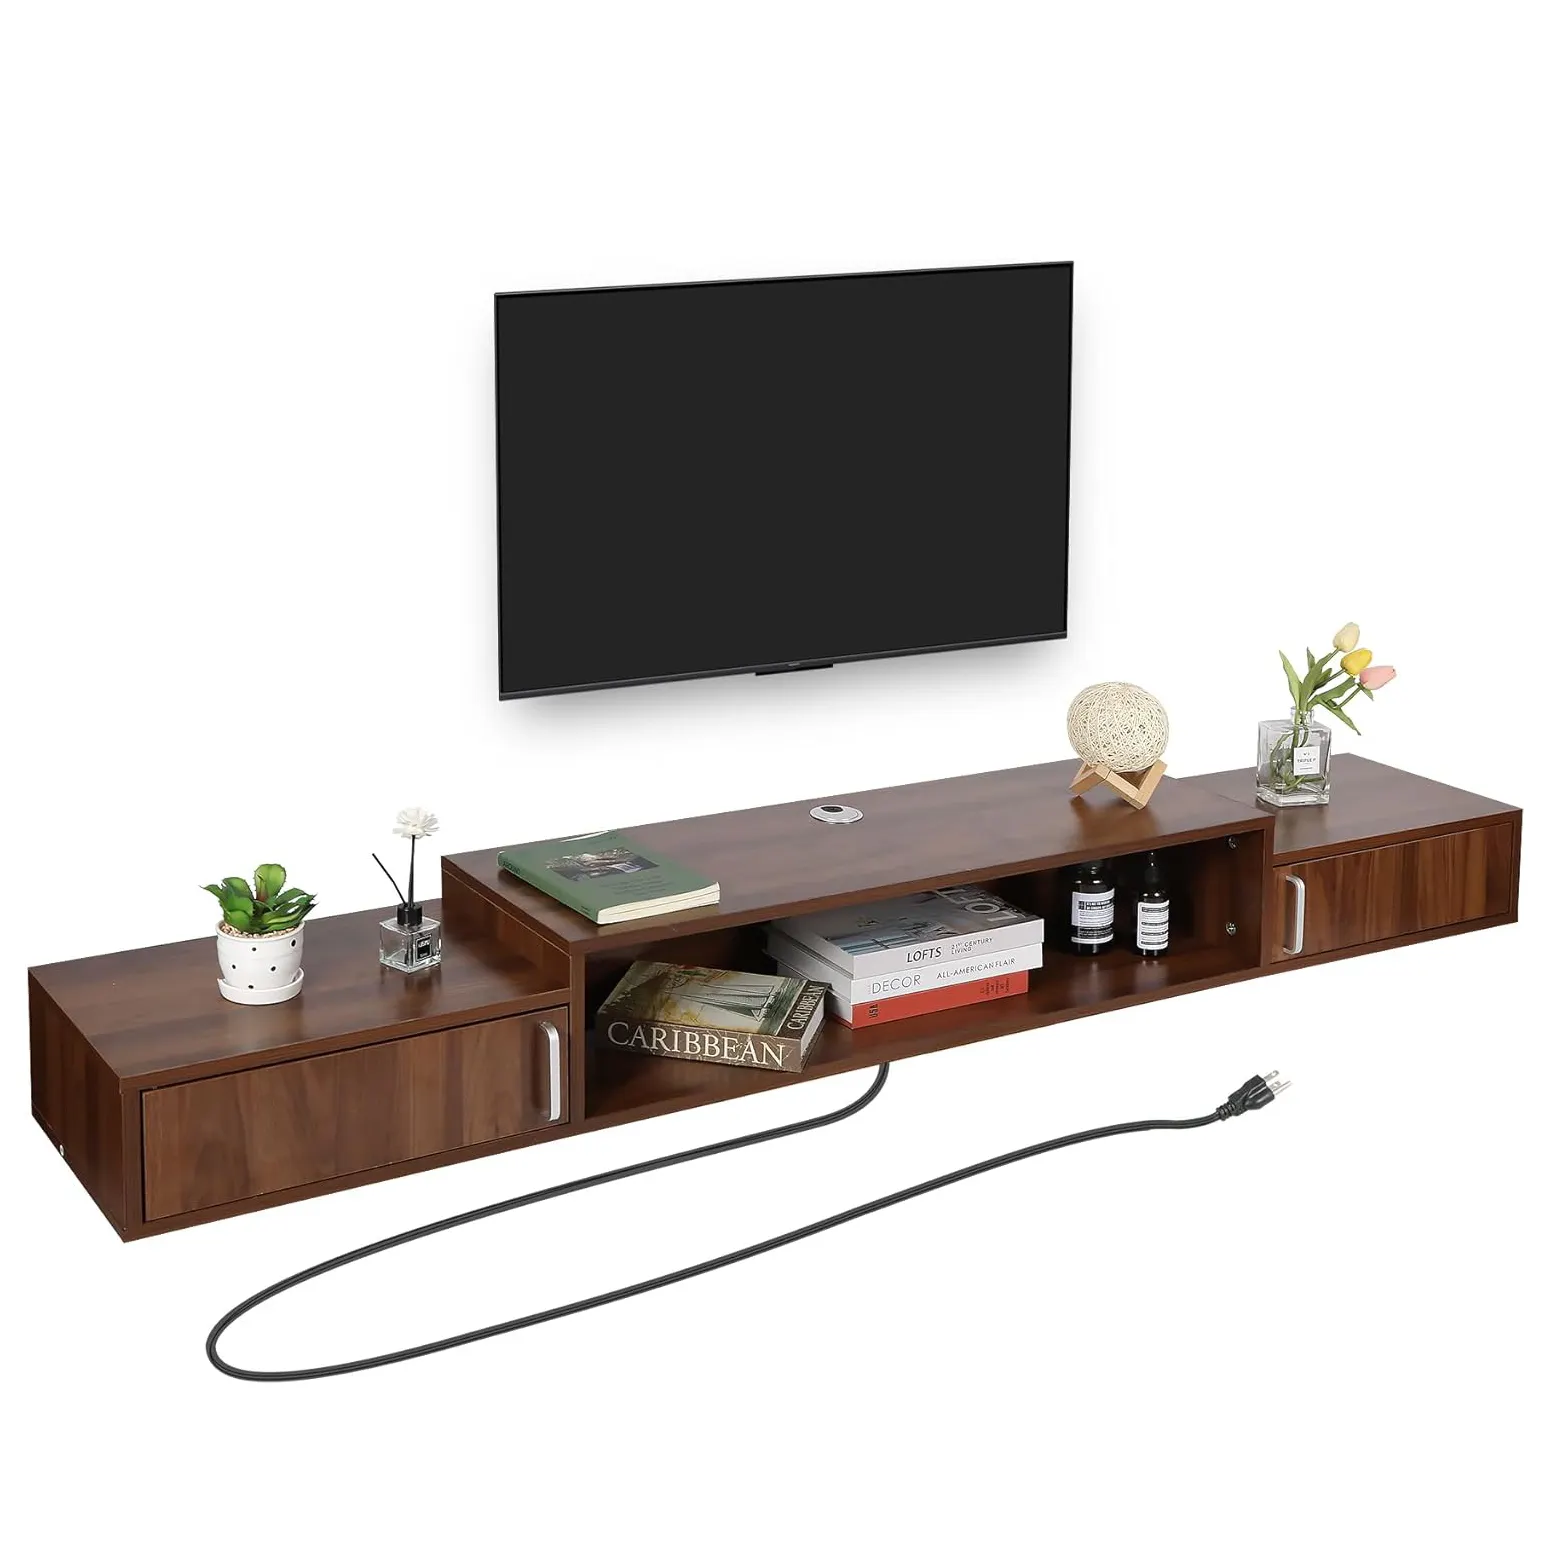 Centro de entretenimiento Consola multimedia moderna Soporte de TV flotante de madera Muebles